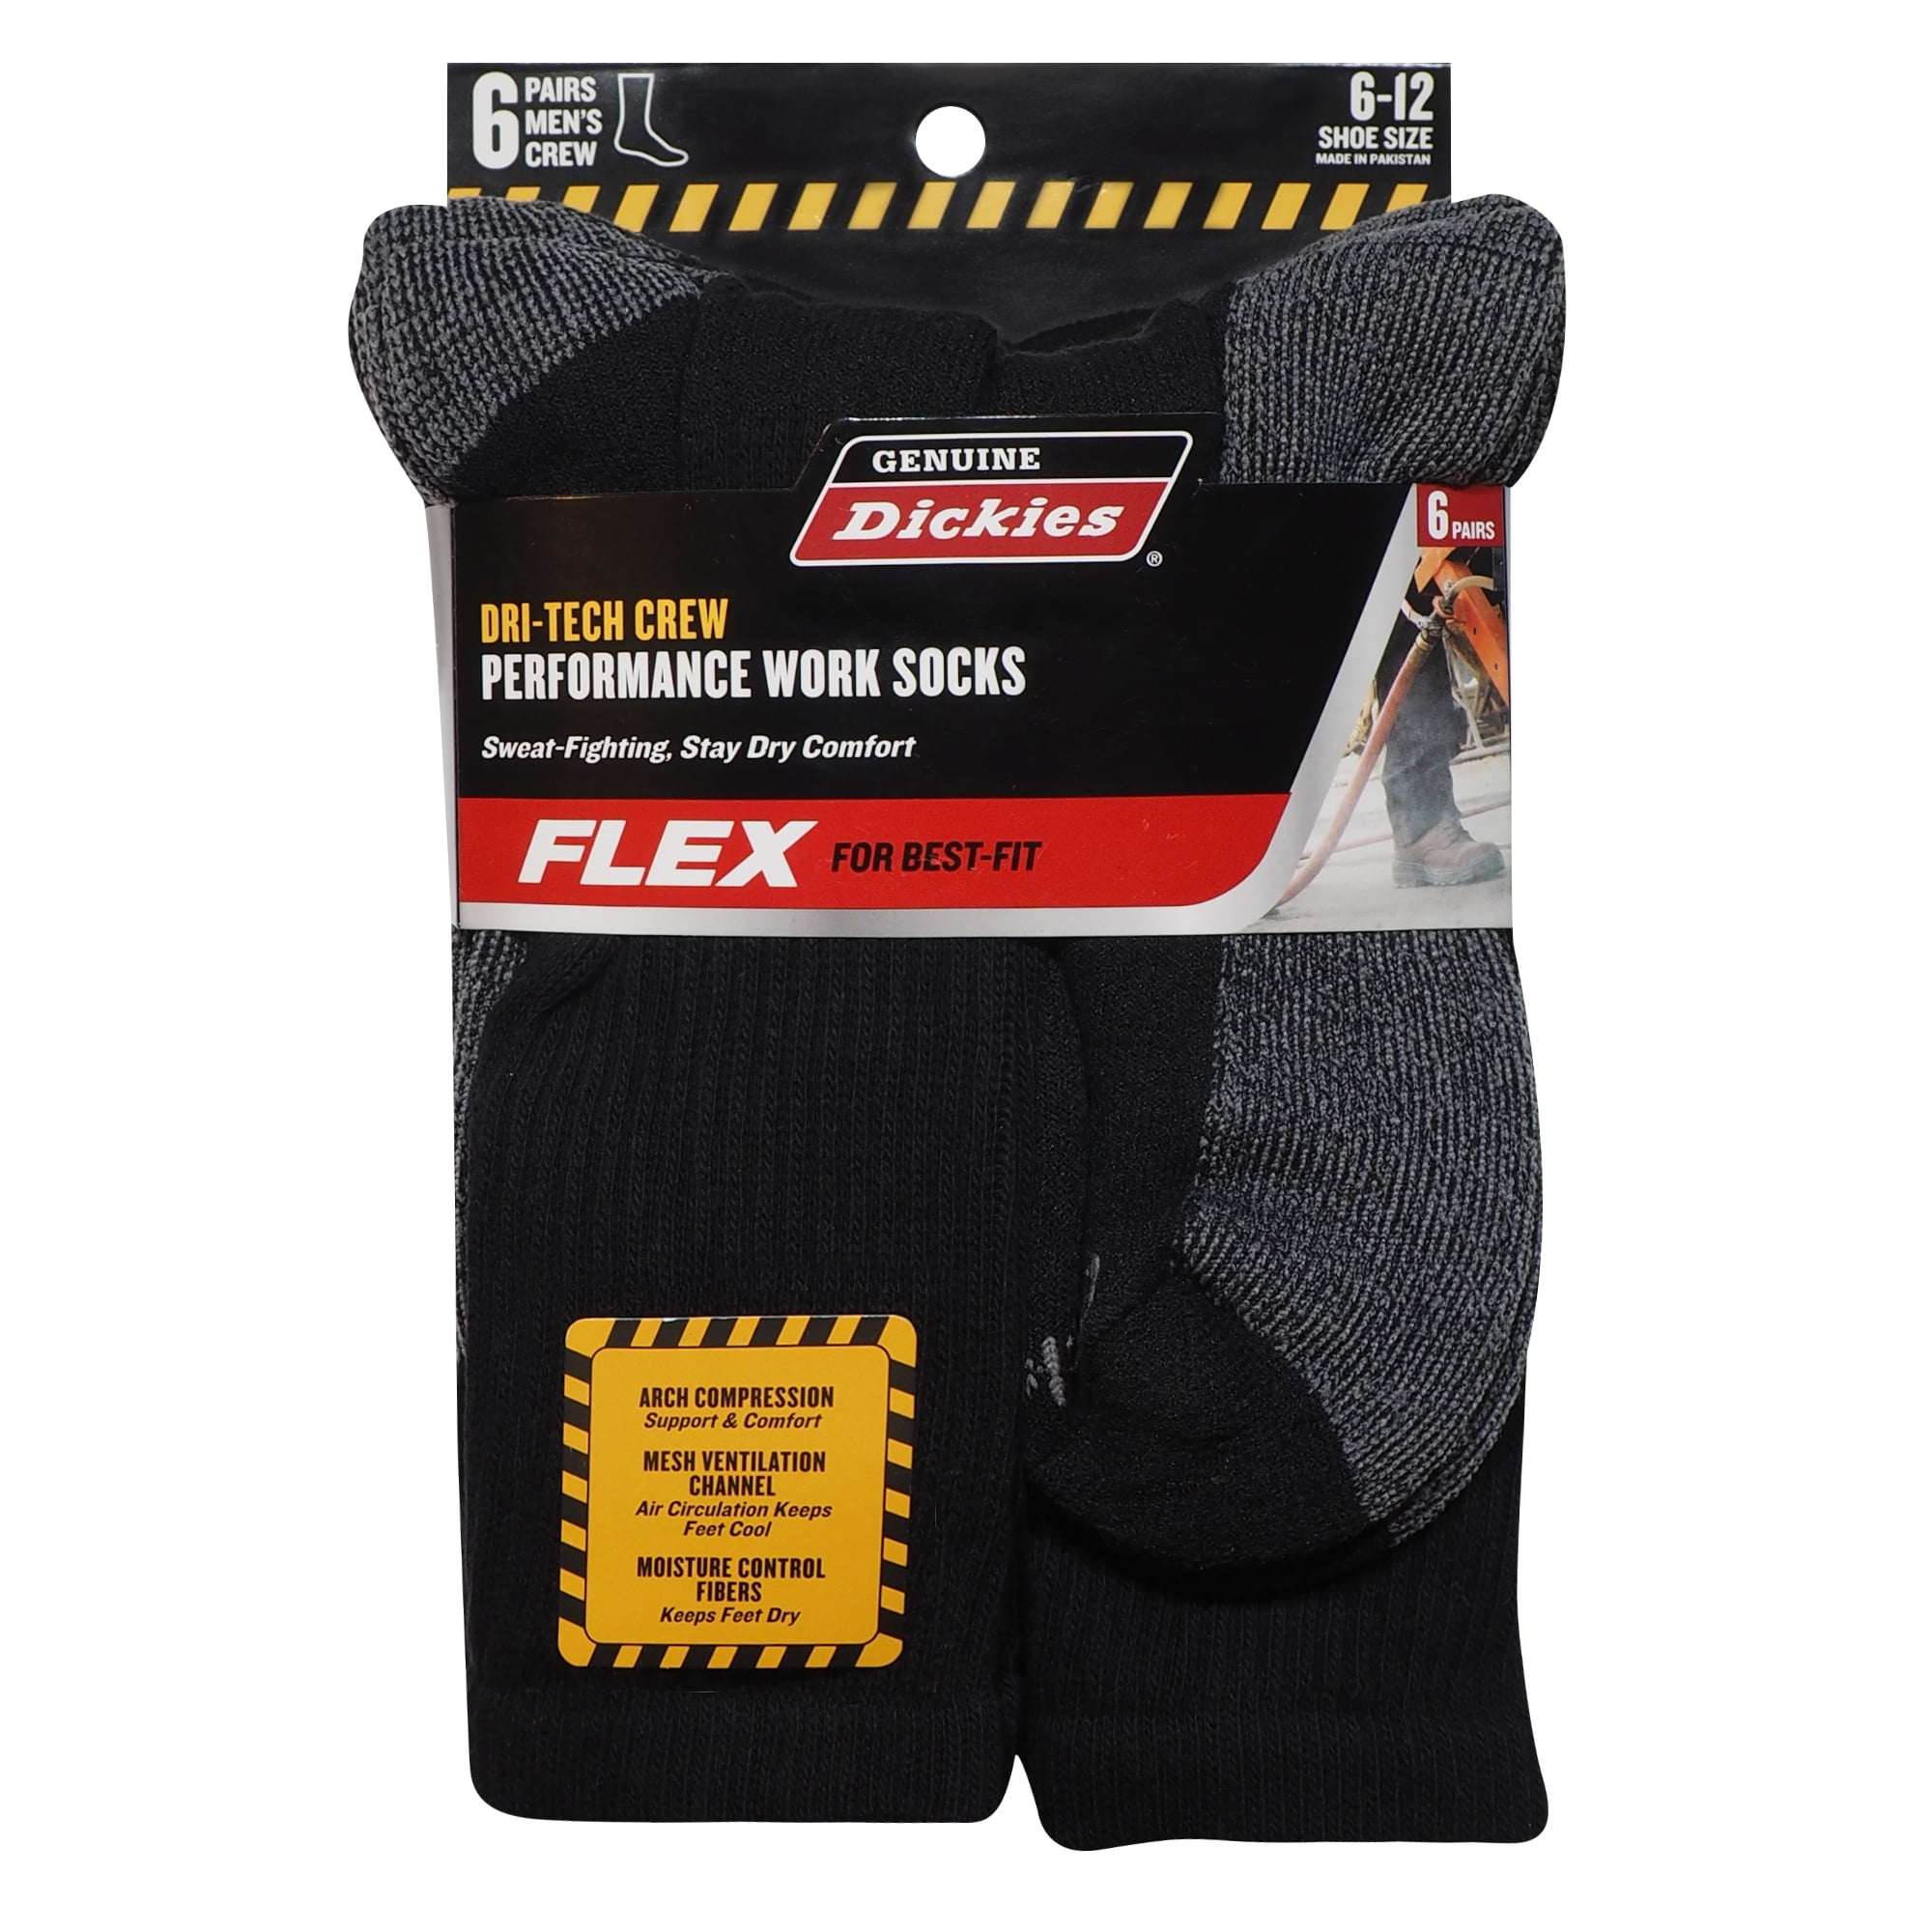 Men's Genuine Dickies Comfort Crew Performance Work Socks 4 Pairs Size 6-12 